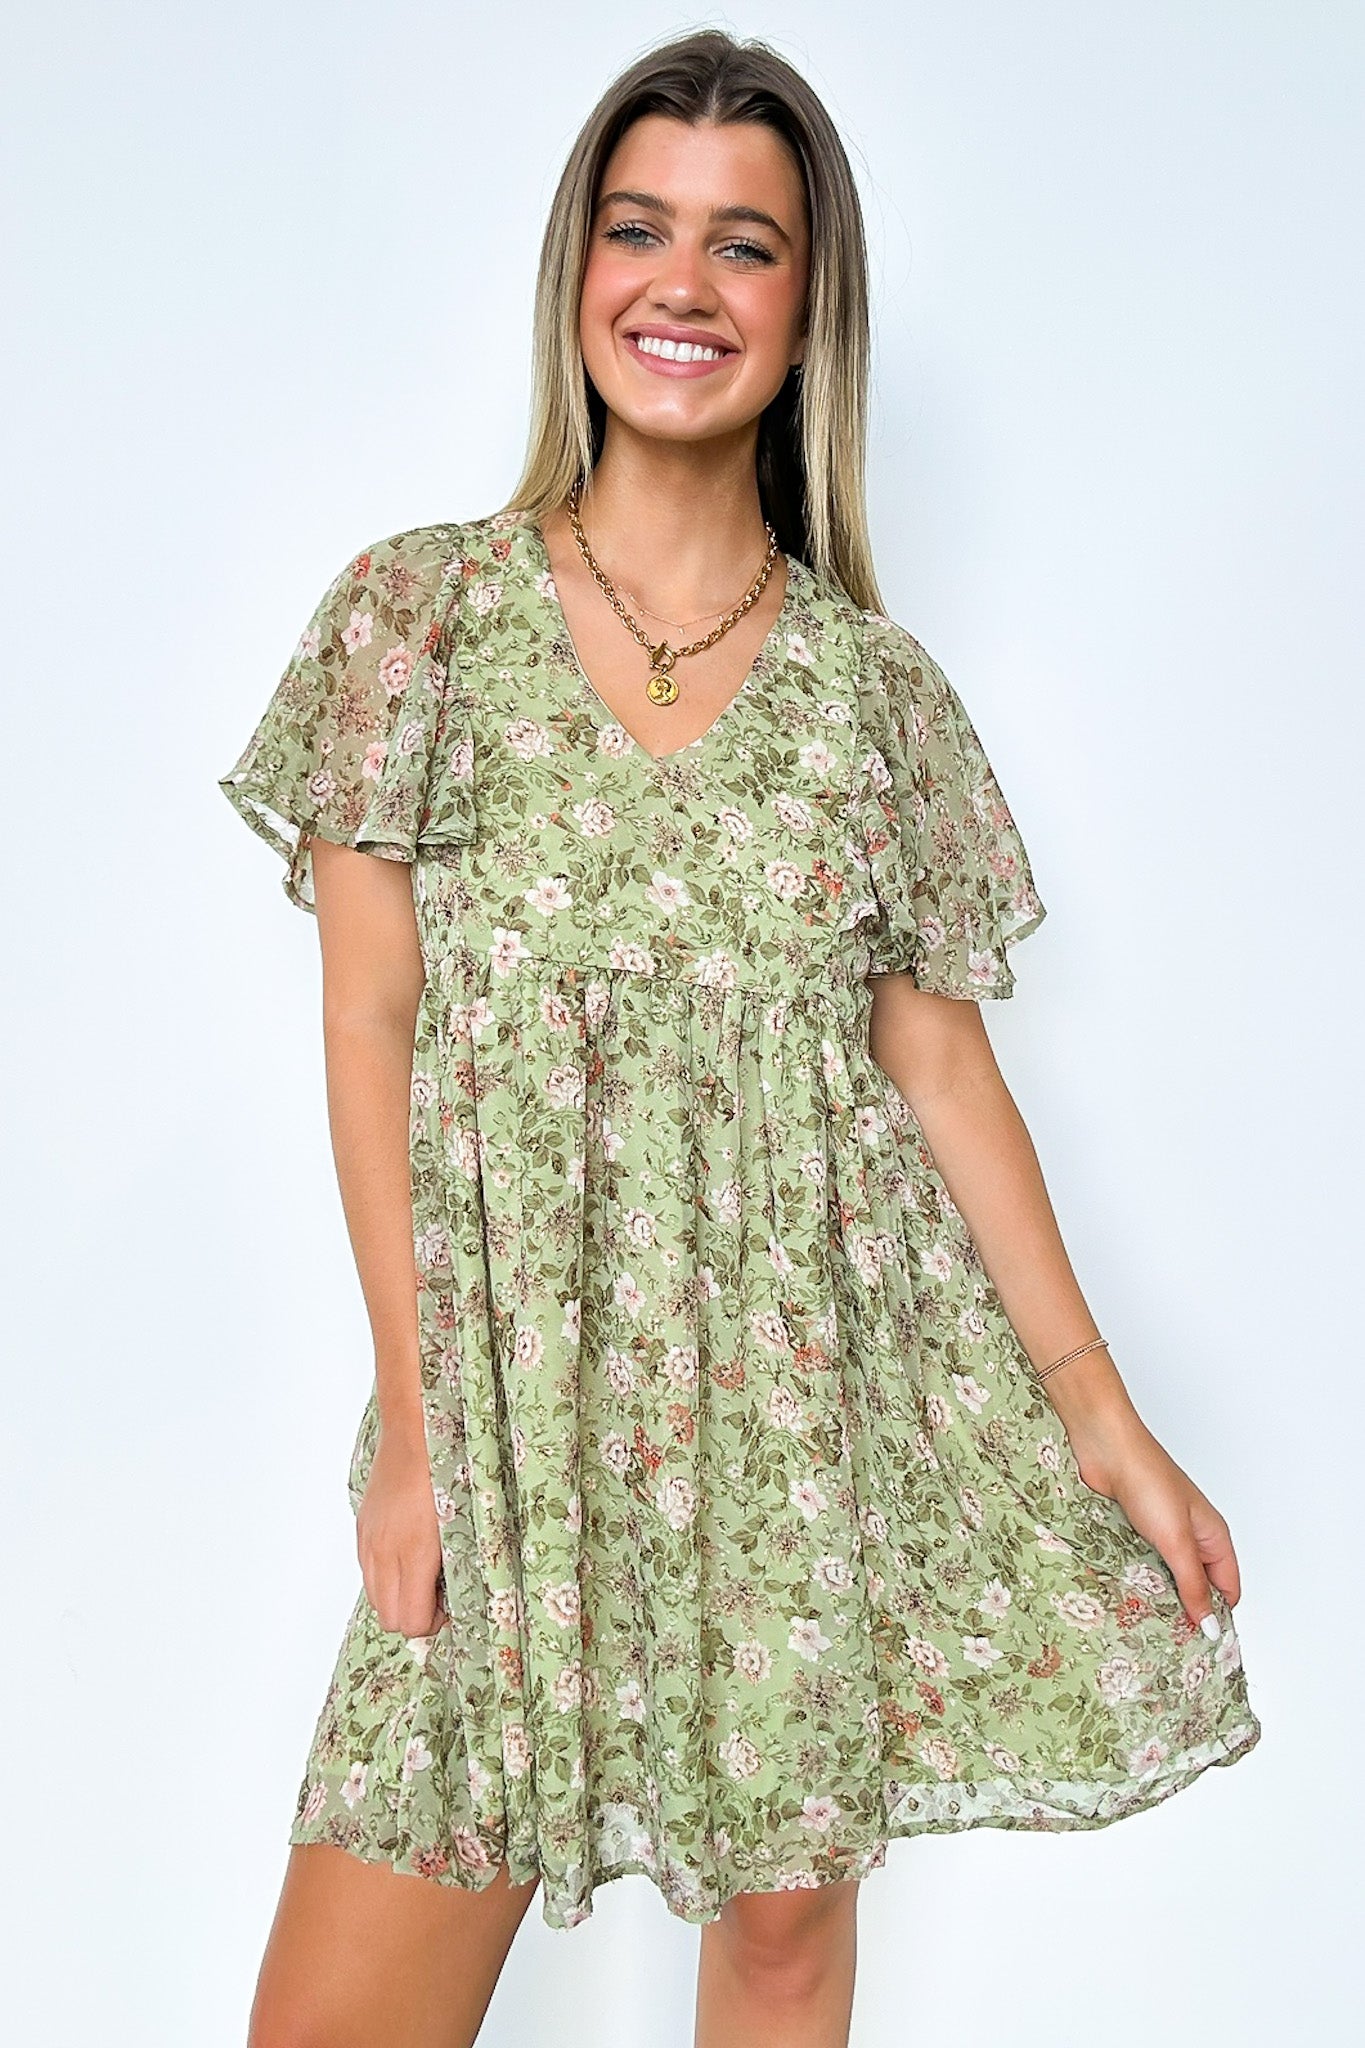  Charming Sunshine Floral Print Dress - Madison and Mallory